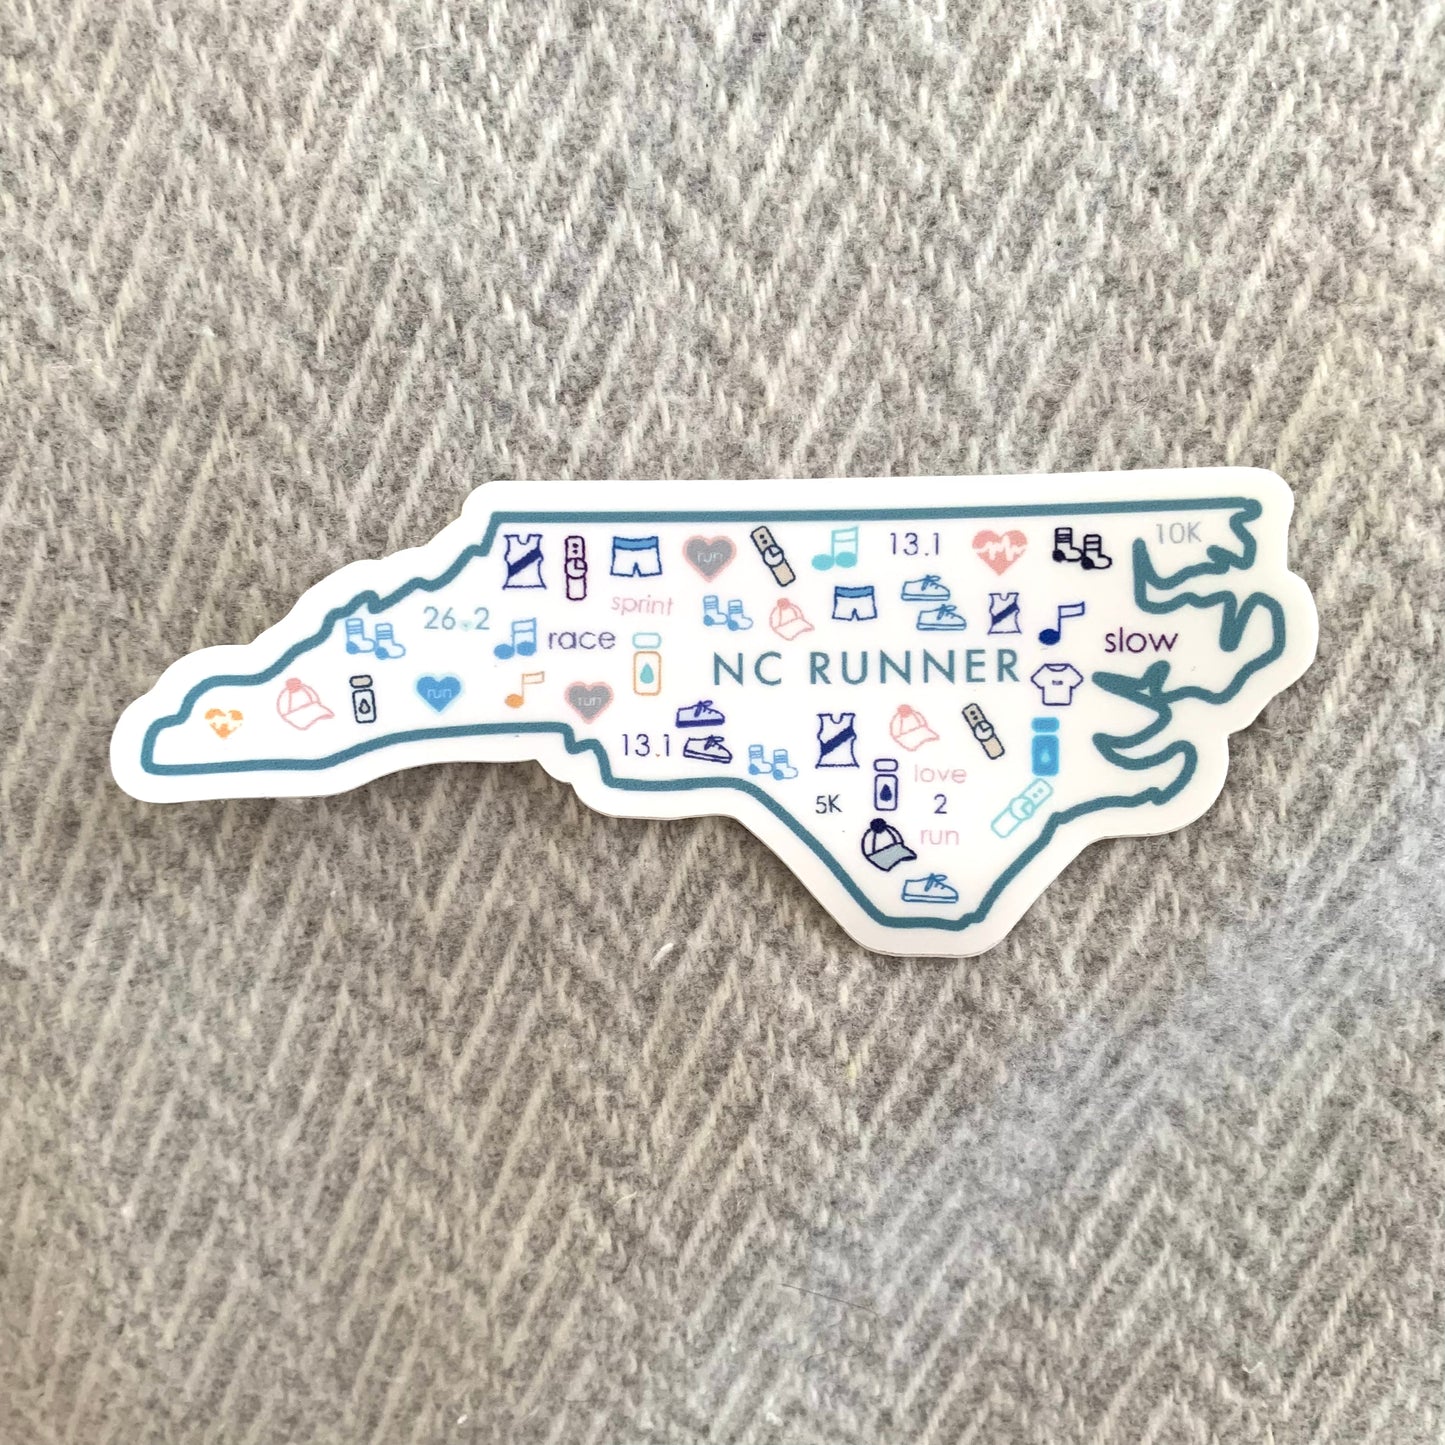 North Carolina runner sticker, North Carolina marathon runner sticker, North Carolina track and field, 50 state runner sticker